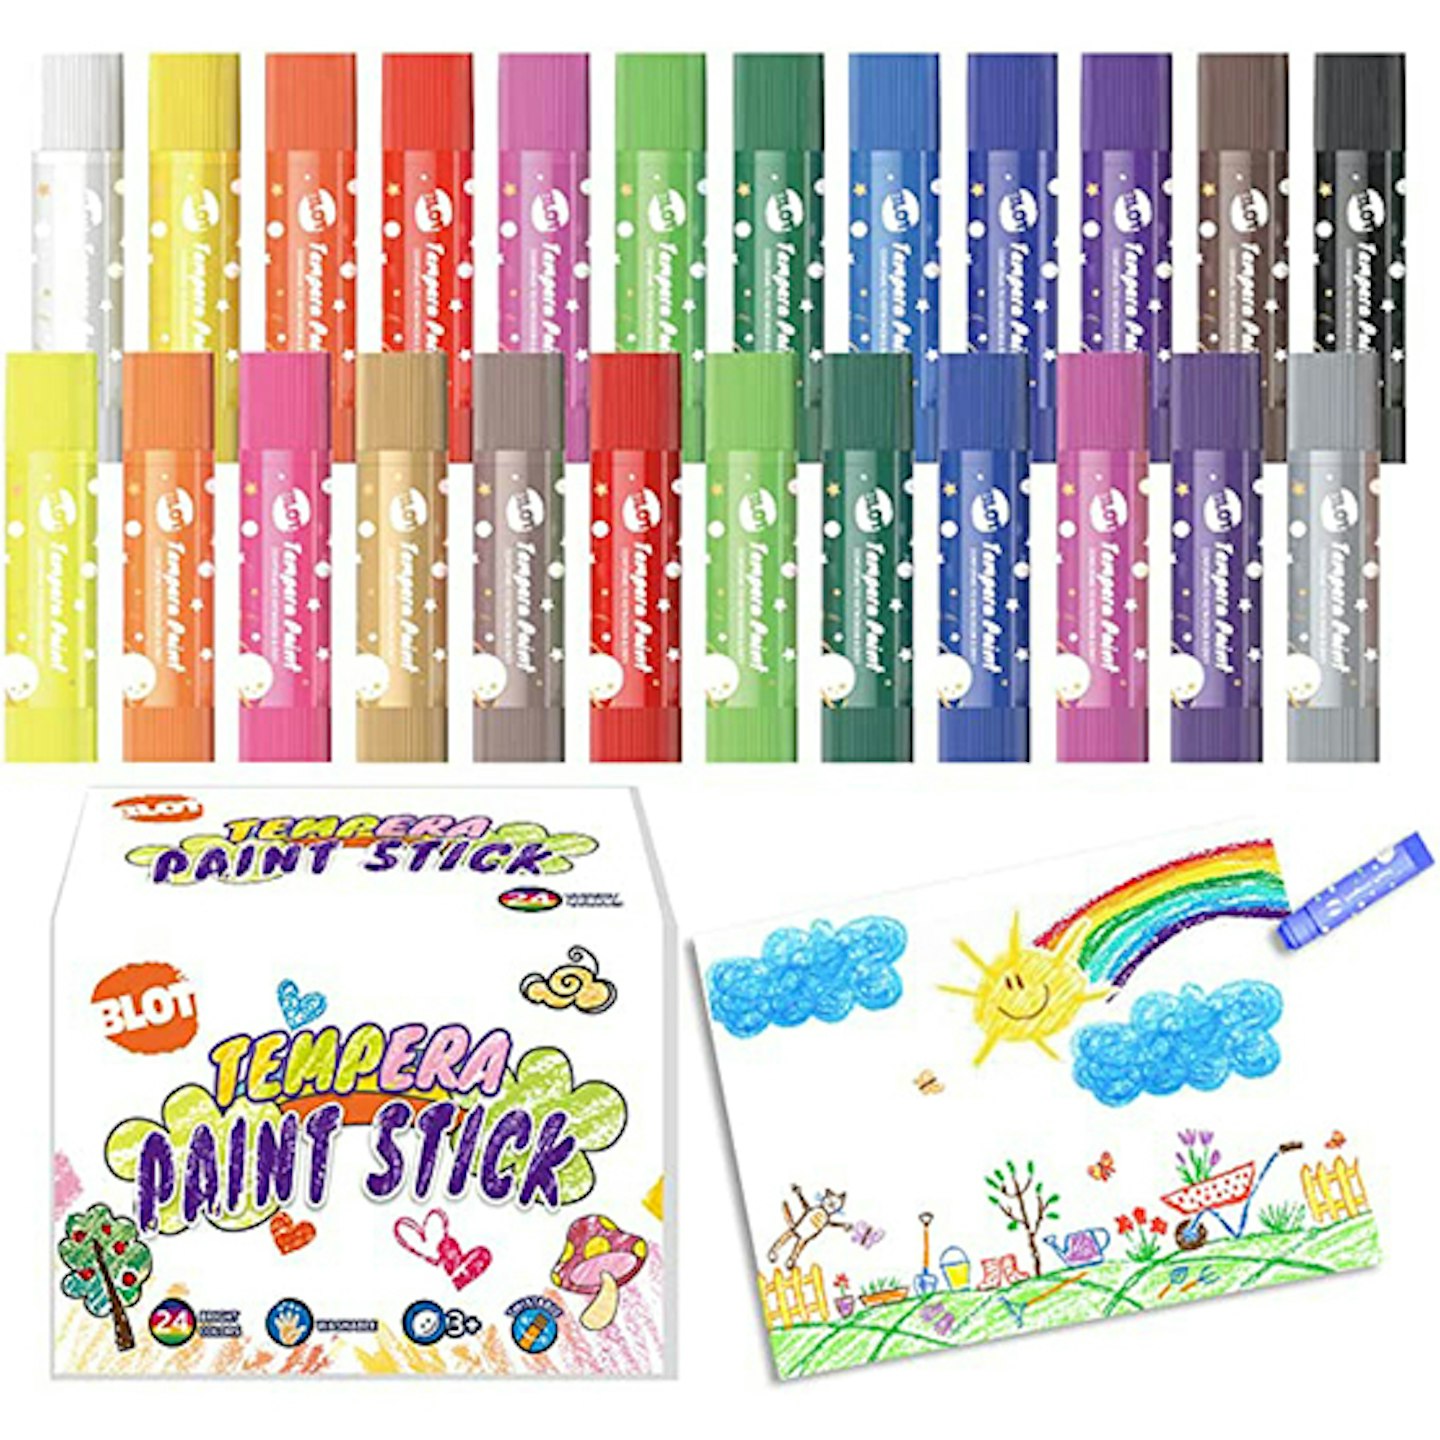 Tempera Paint Sticks for Kids